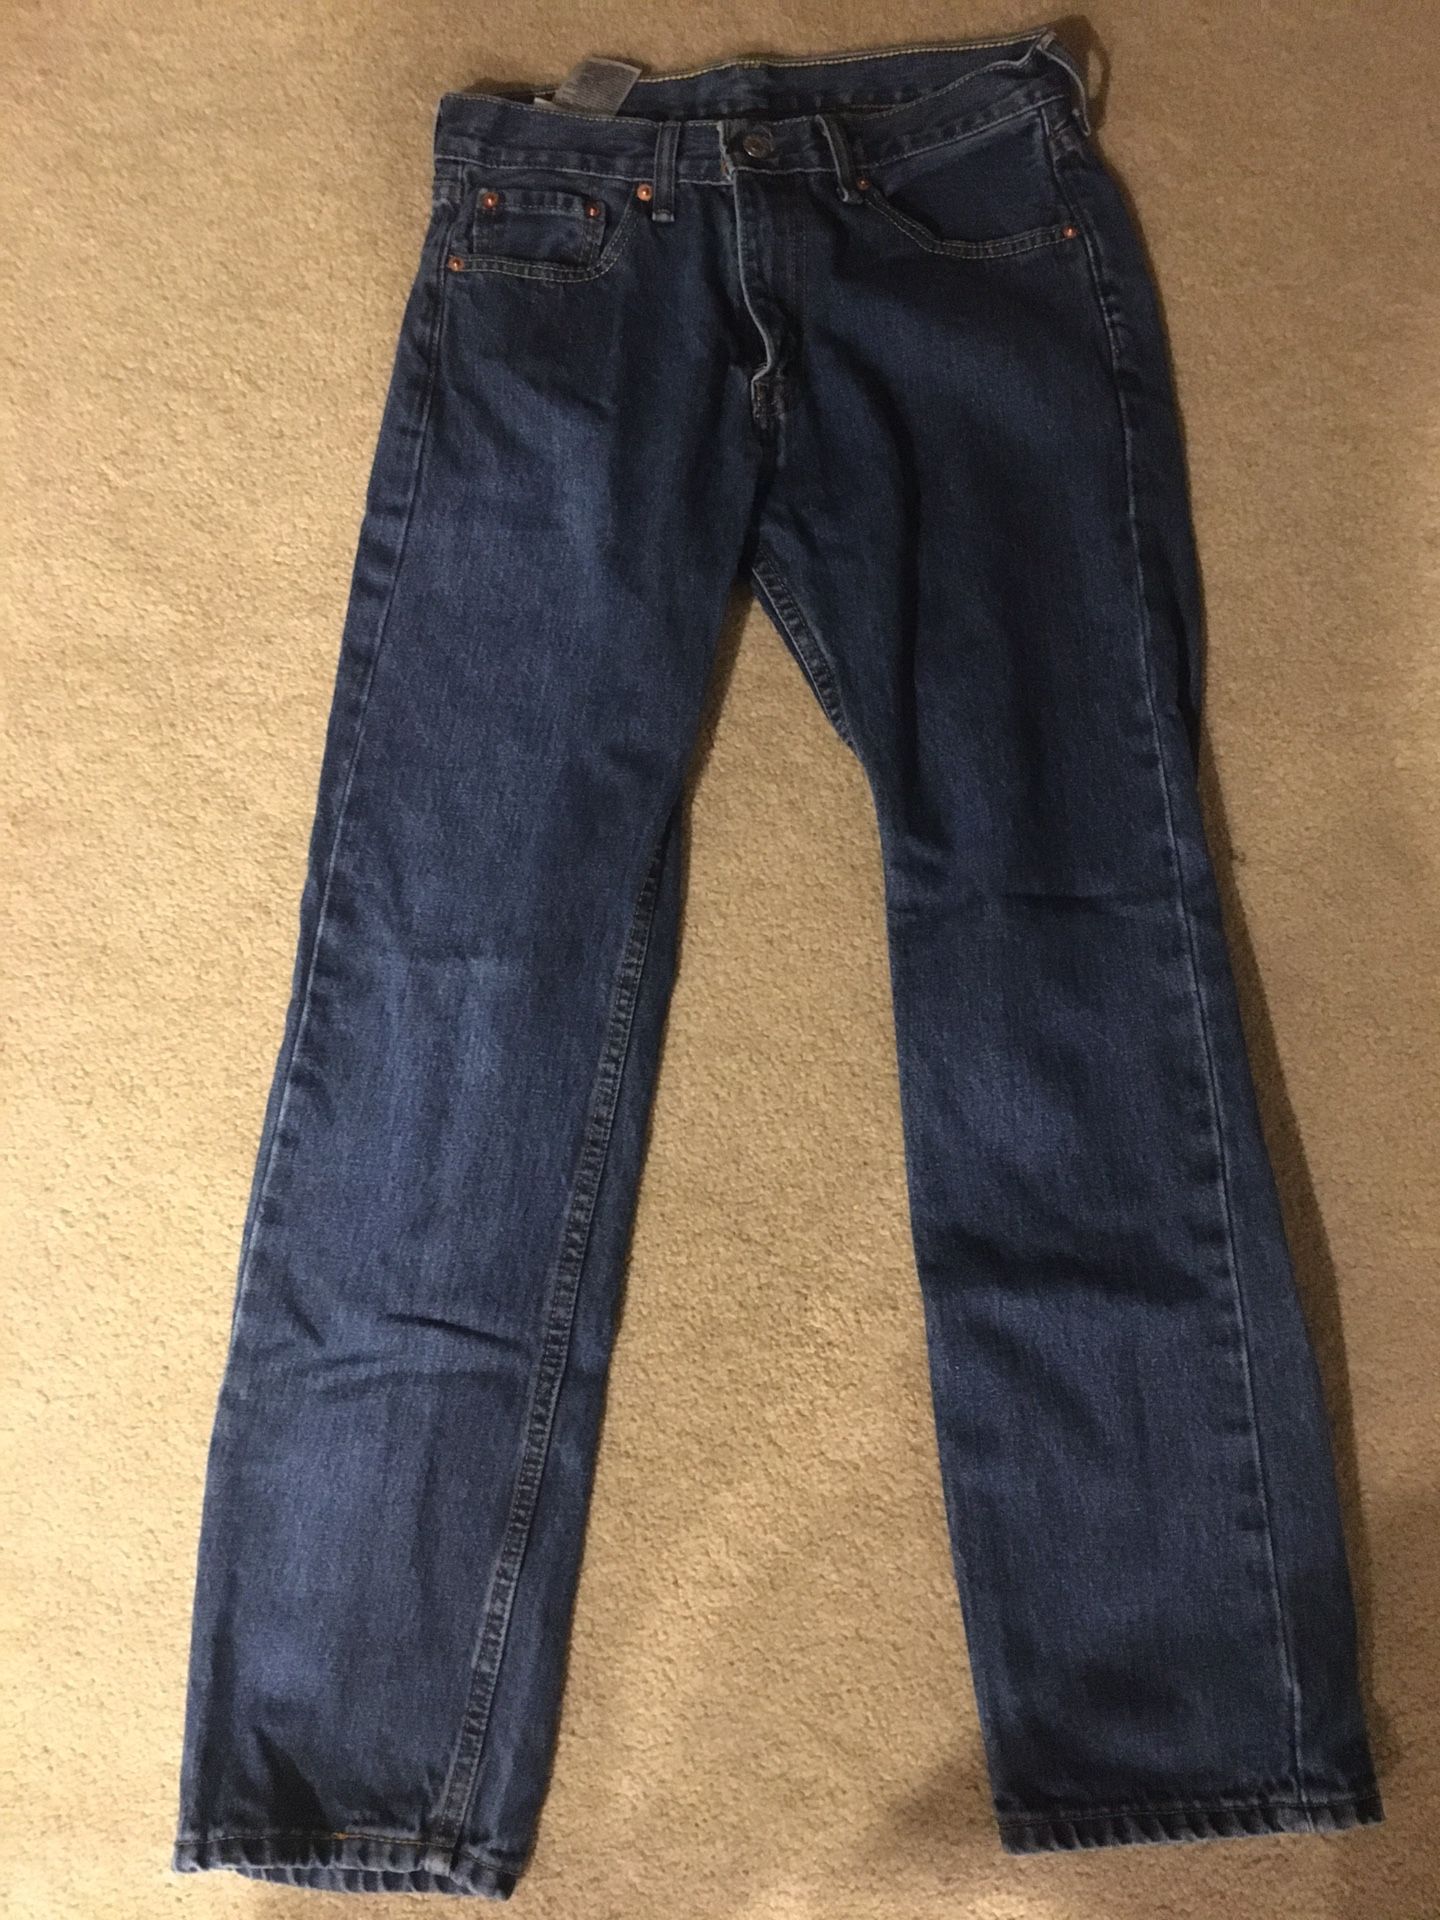 Levi’s 505 Regular Fit Men’s Jeans- Medium Stonewash- Size 30